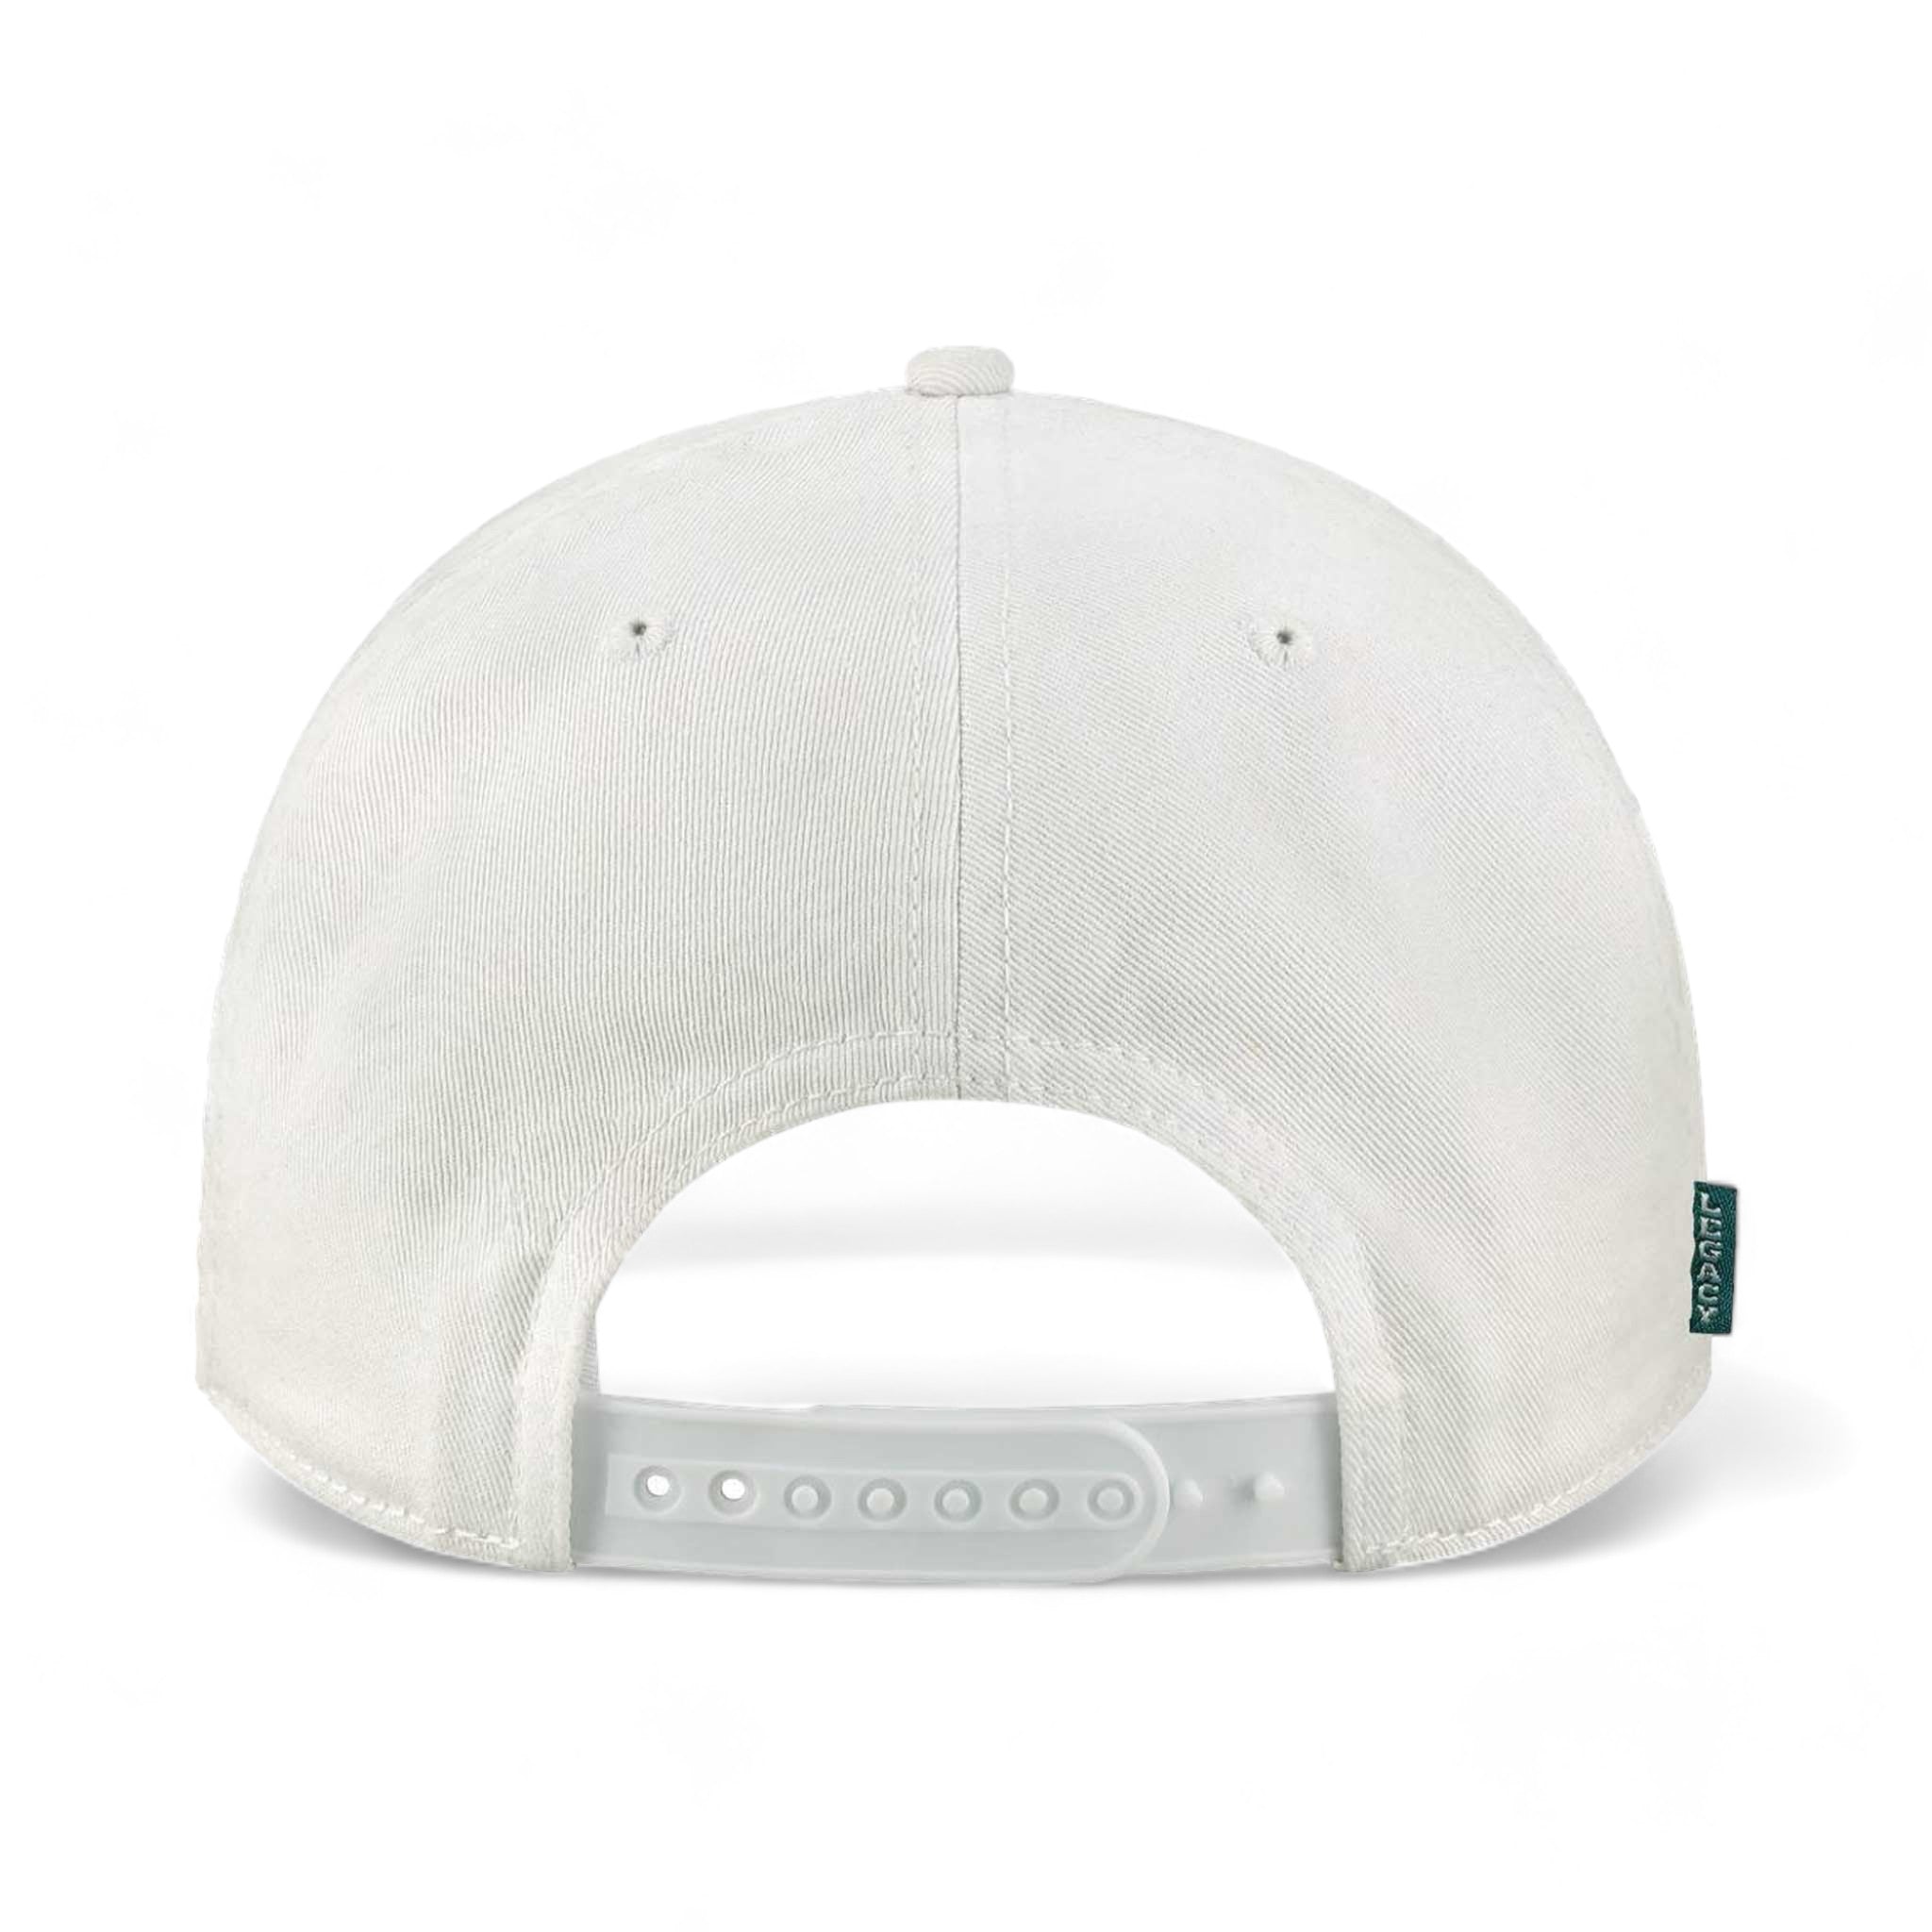 Back view of LEGACY SKULLY custom hat in white